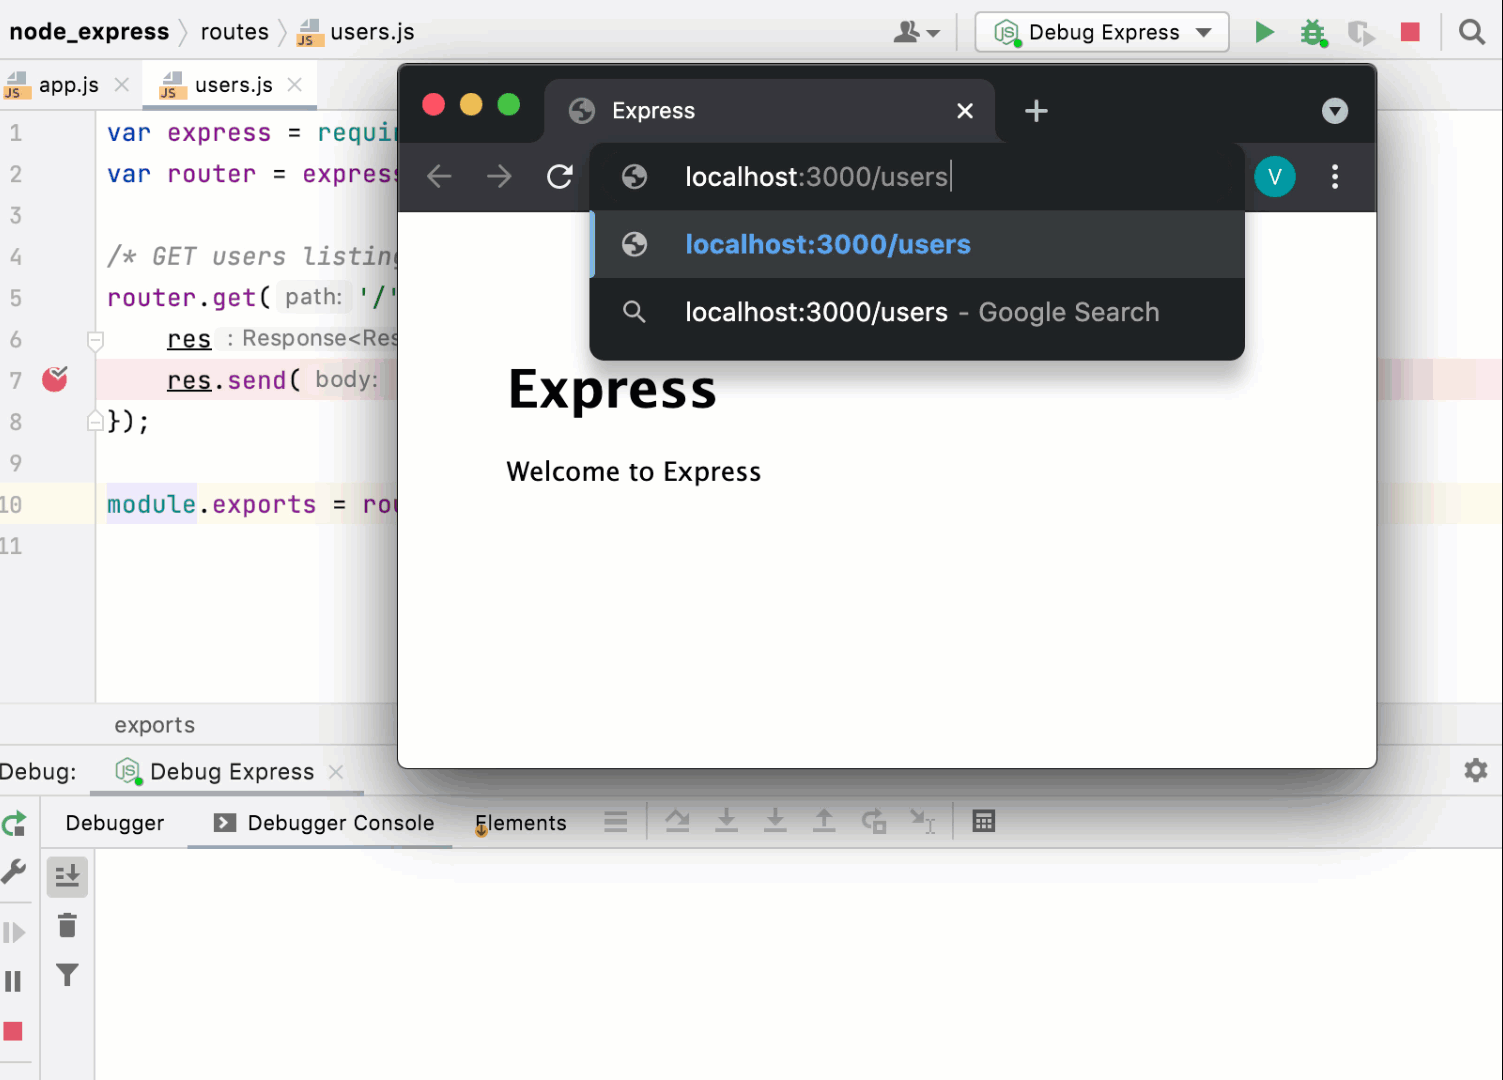 Start and debug a Node.js Express app